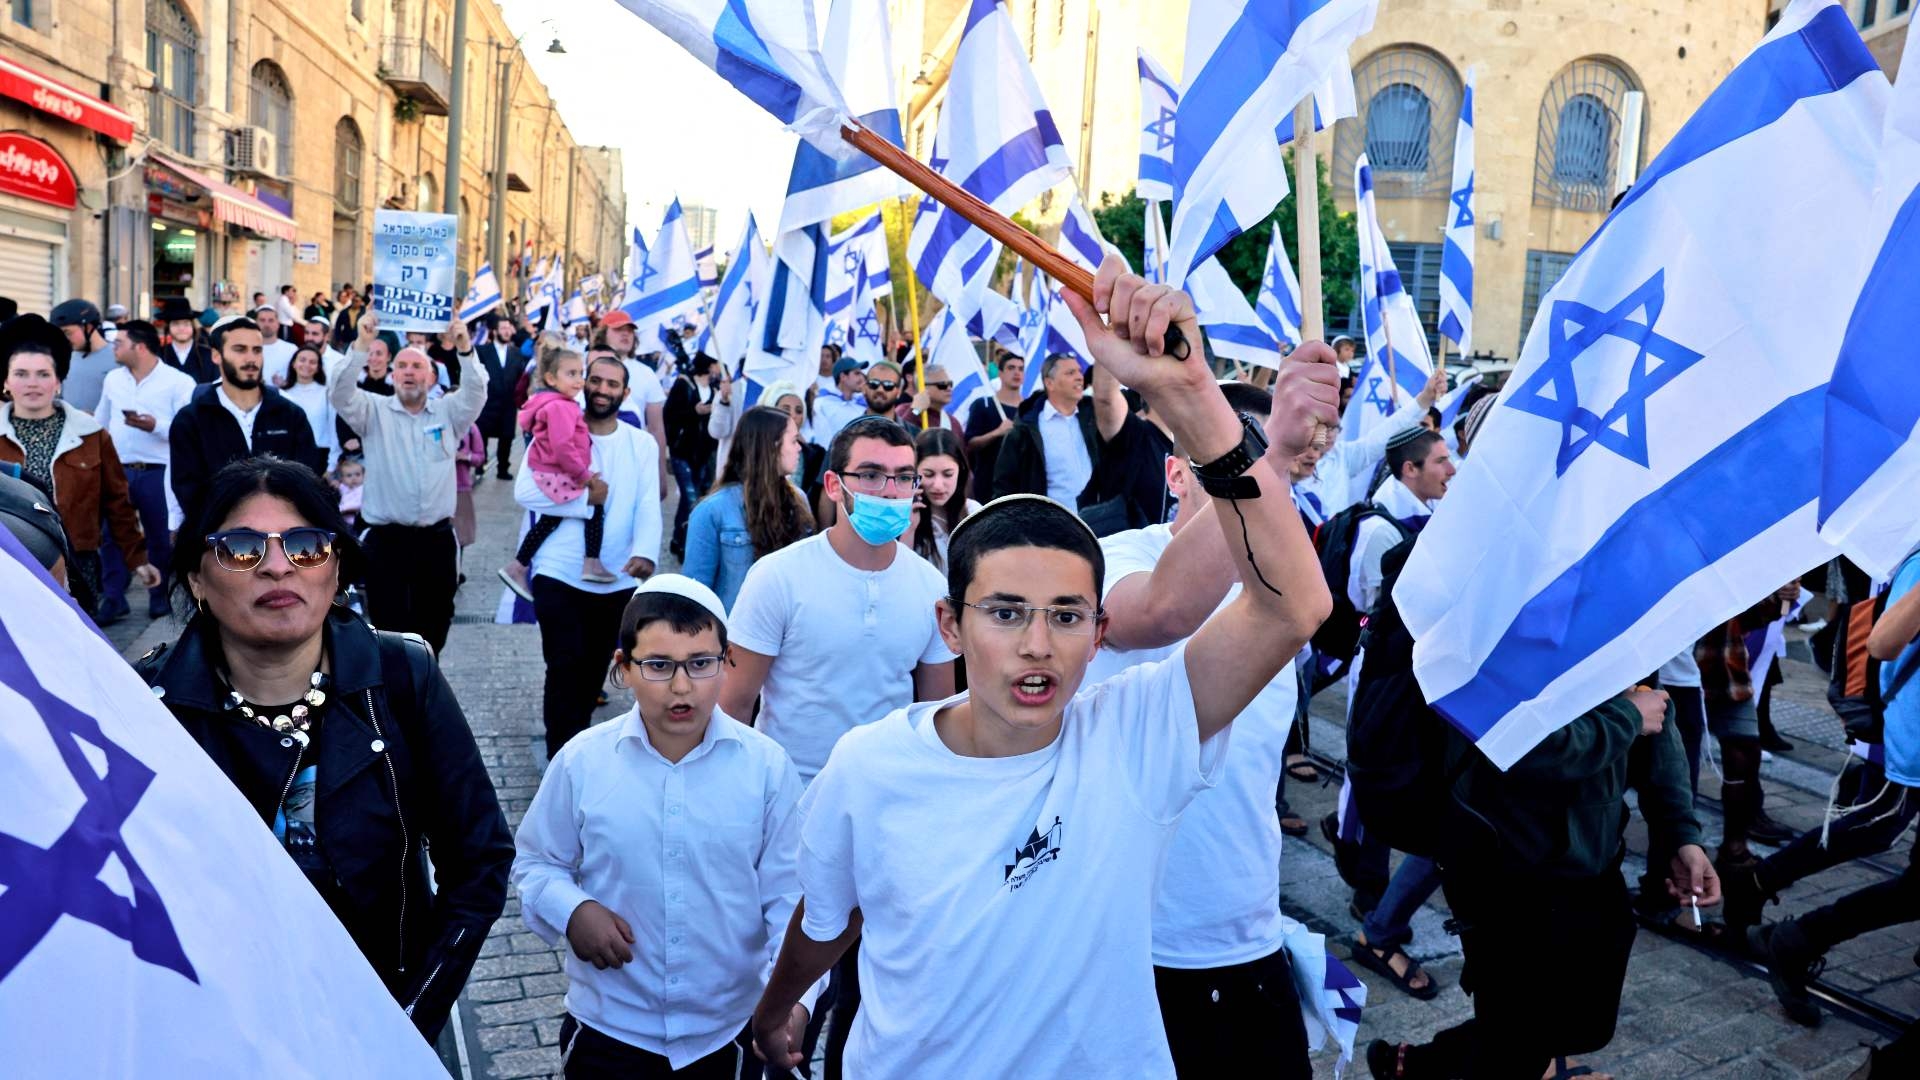 Israel deploys heavy police presence for annual flag march through